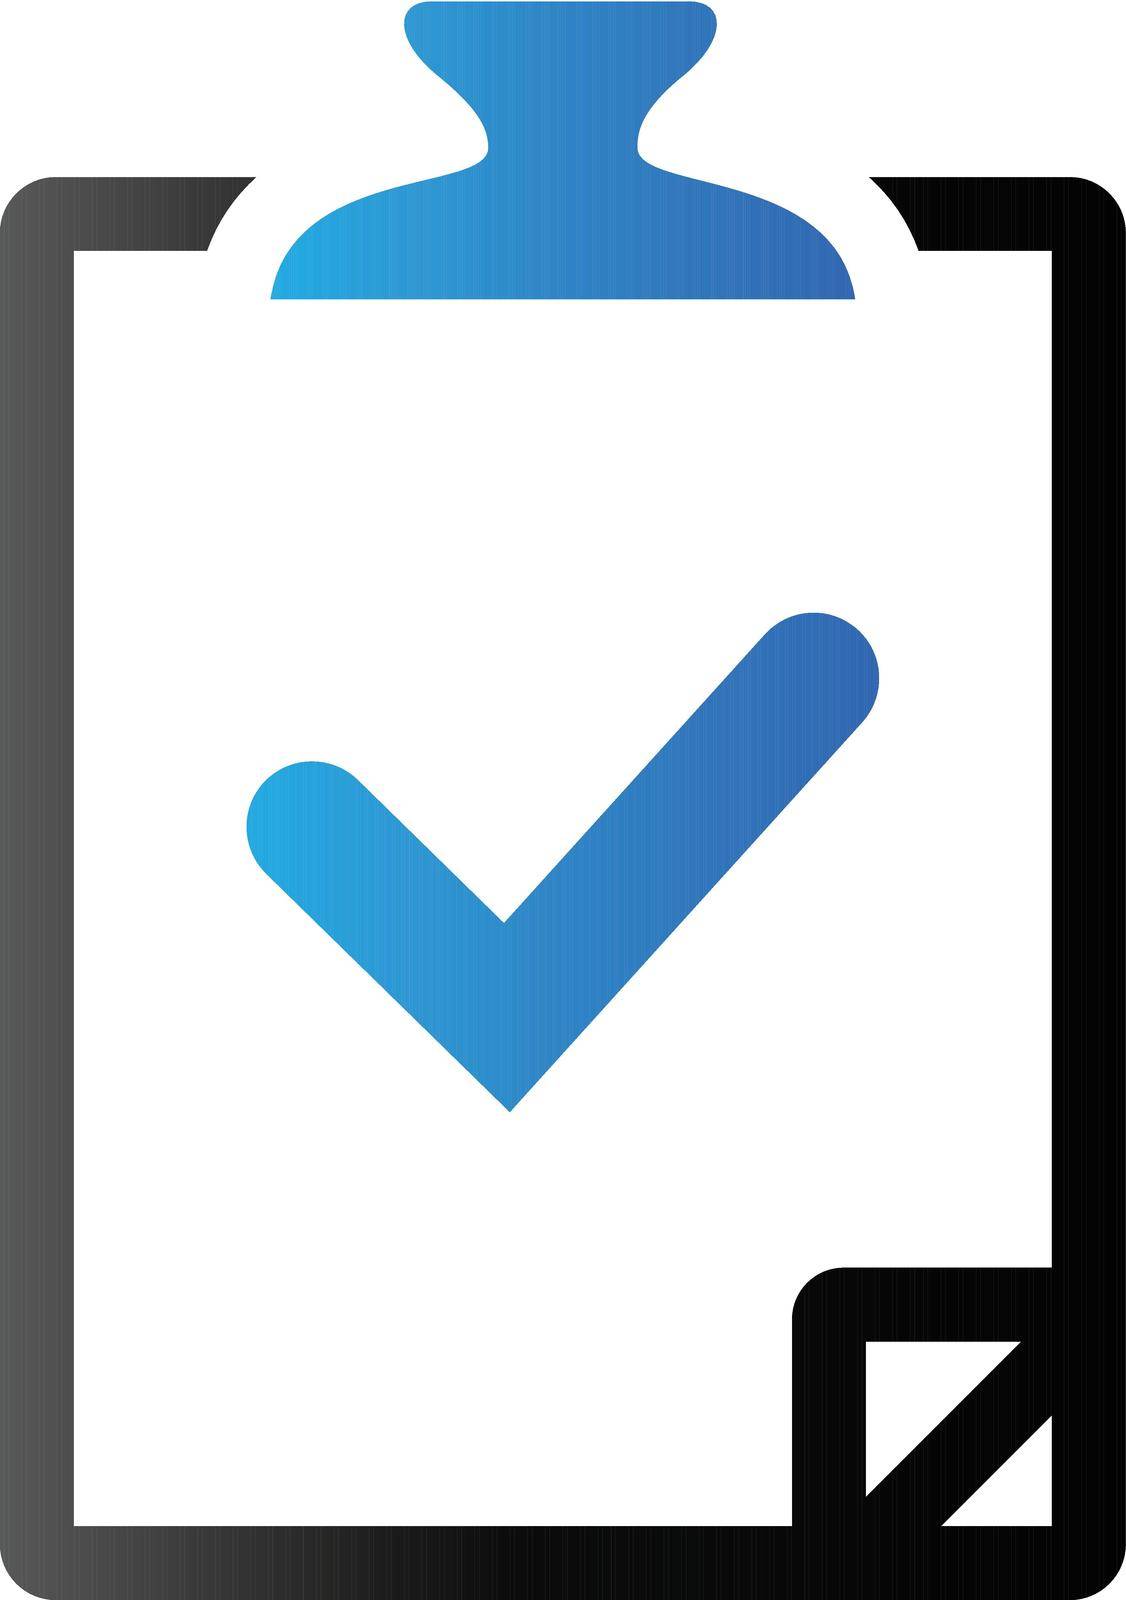 Checkmark icon in duo tone color. Organizer reminder schedule